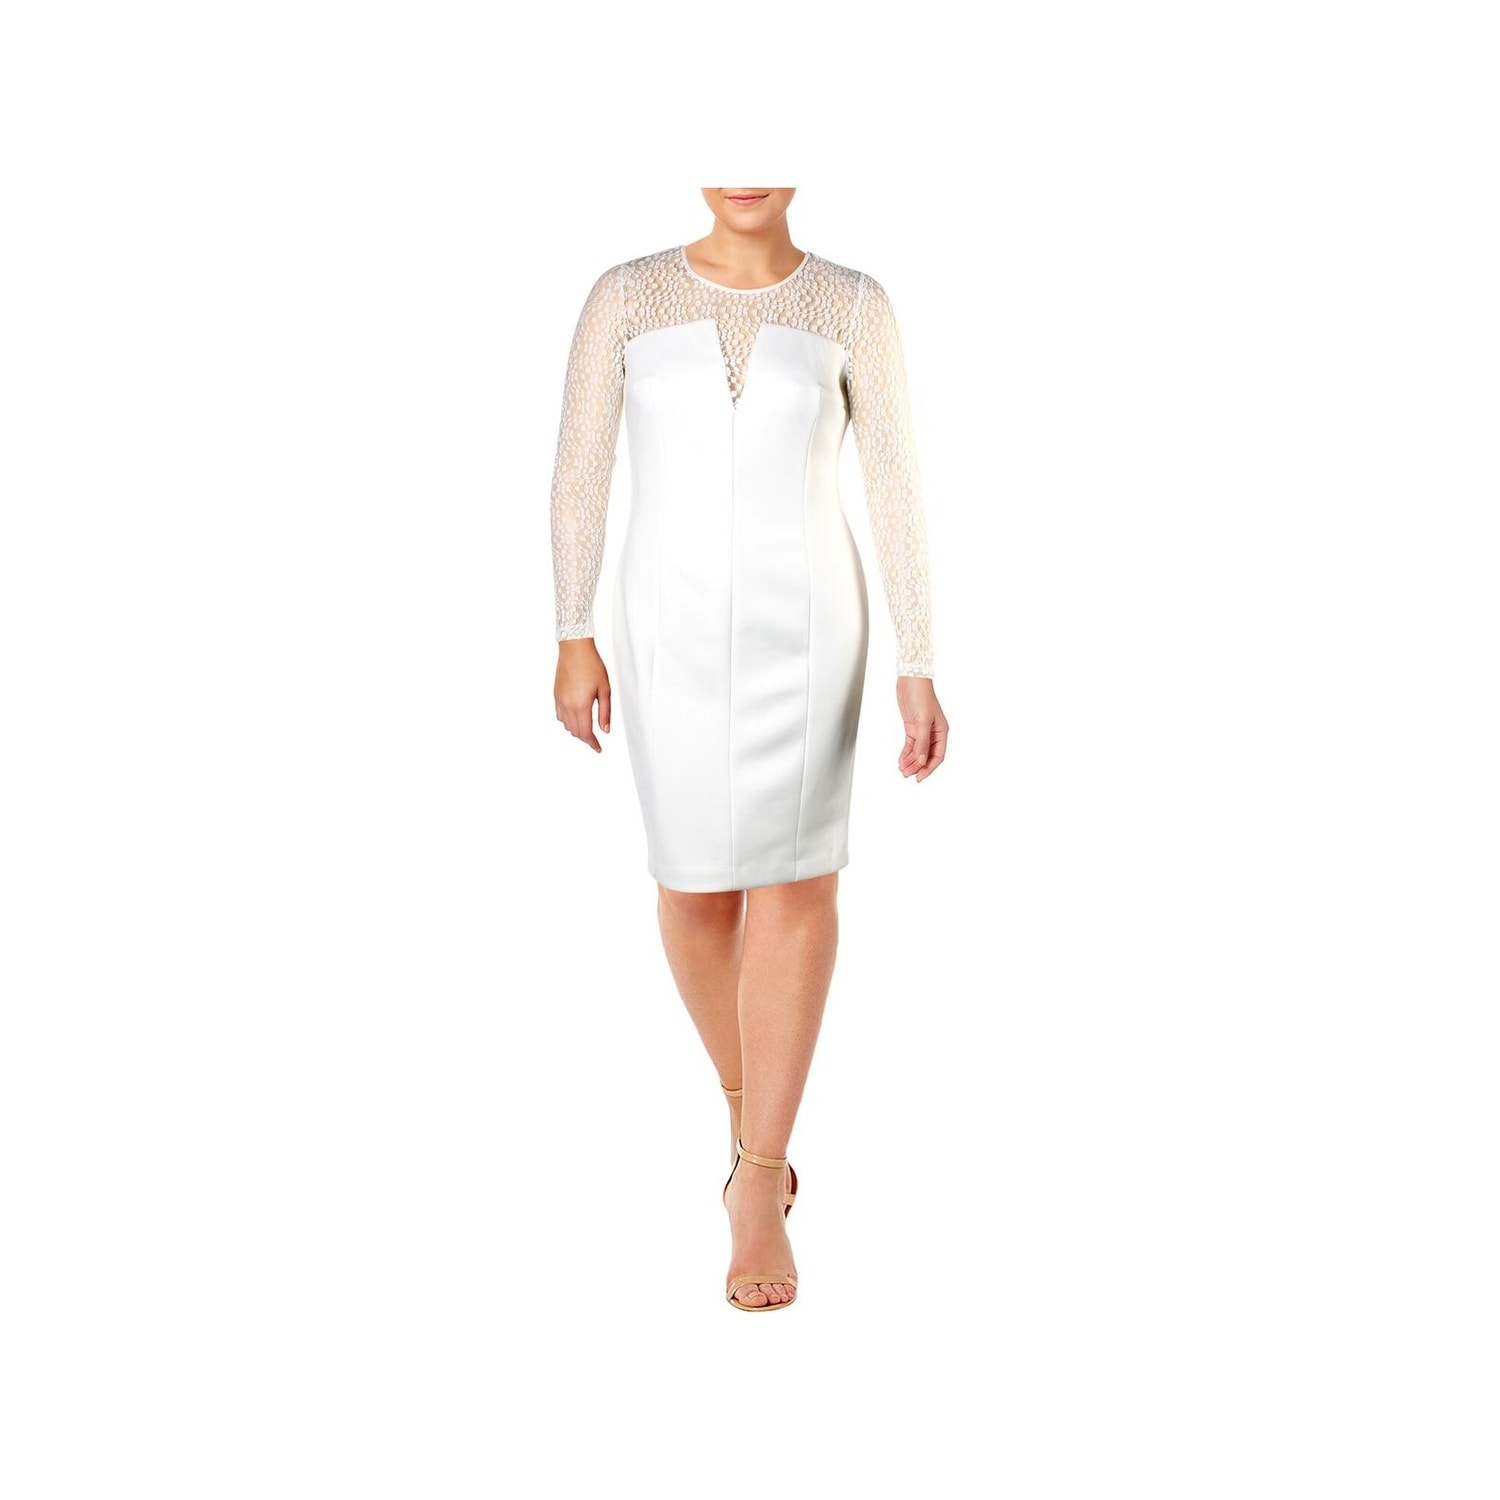 calvin klein white sheath dress